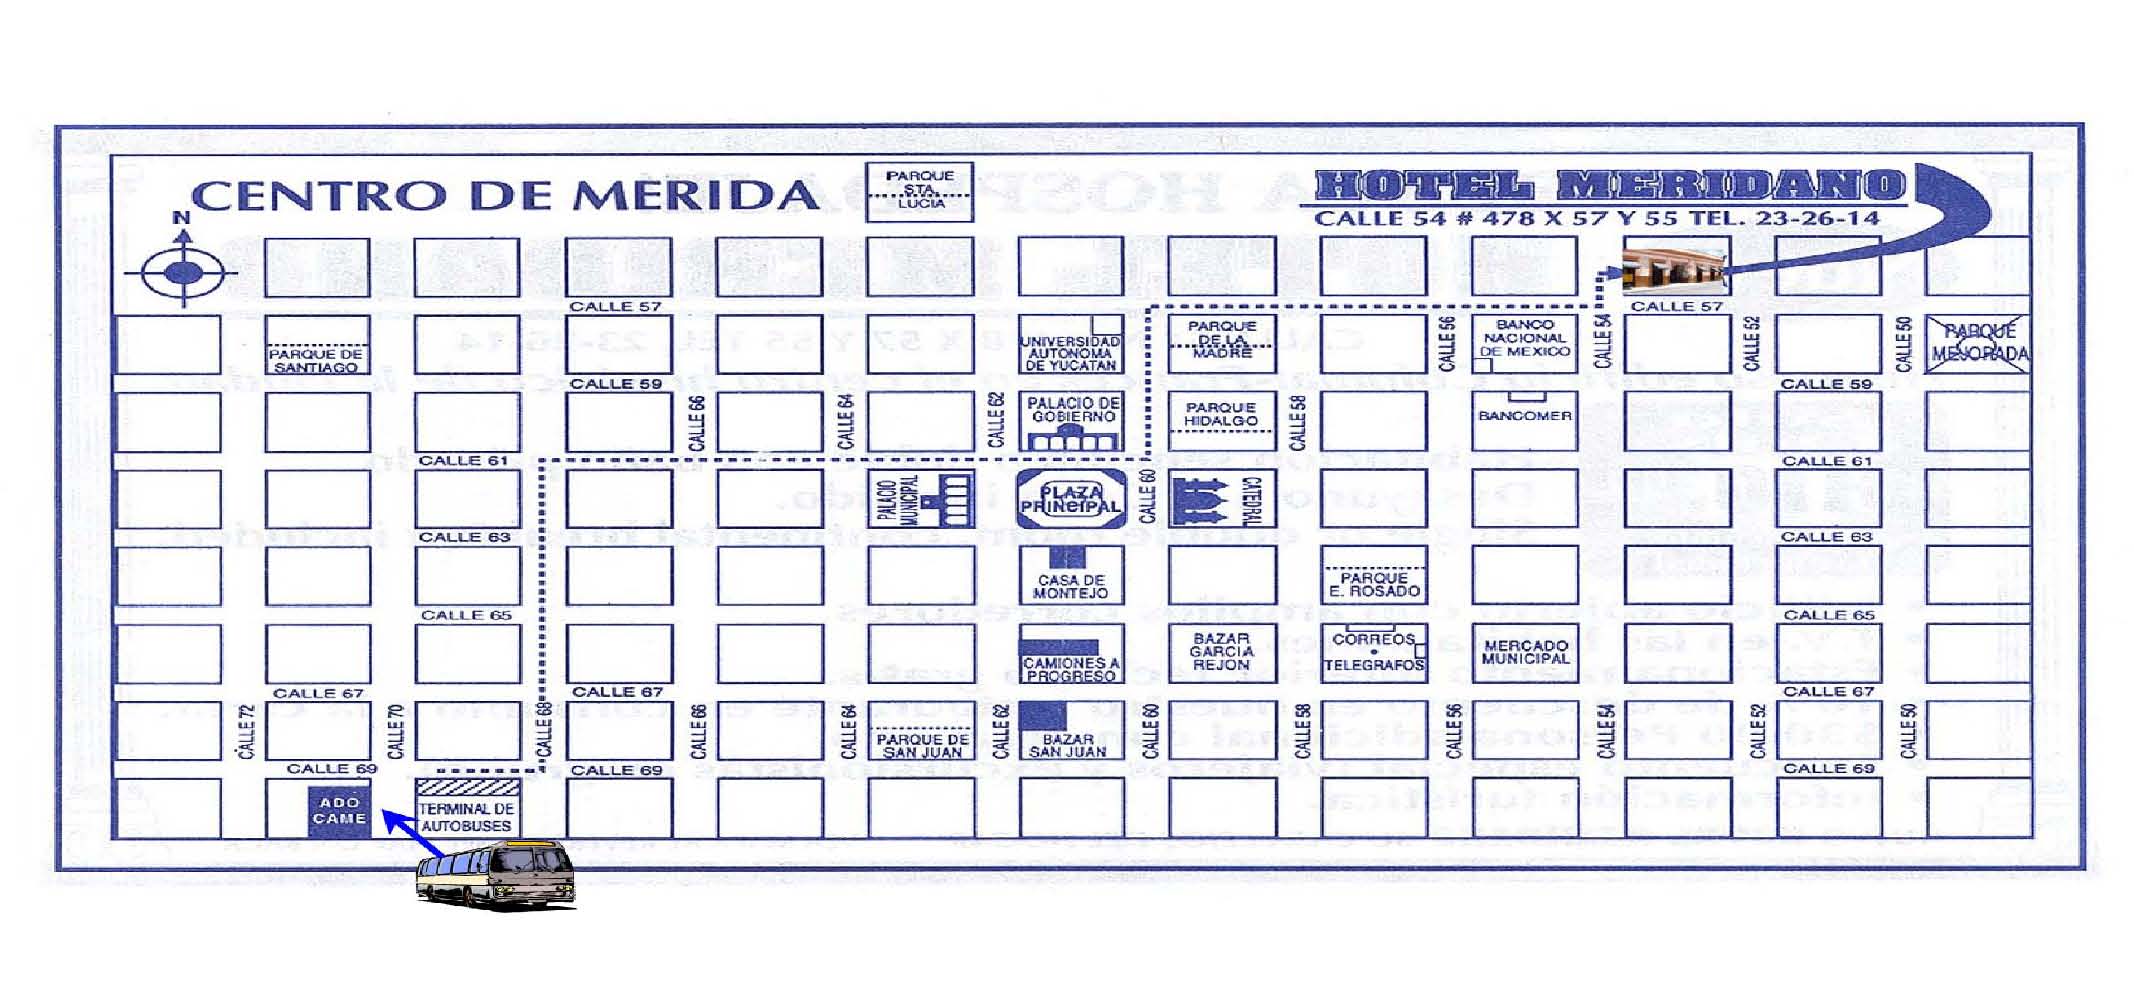 Hotel Meridano Merida historic center map directions to bus station